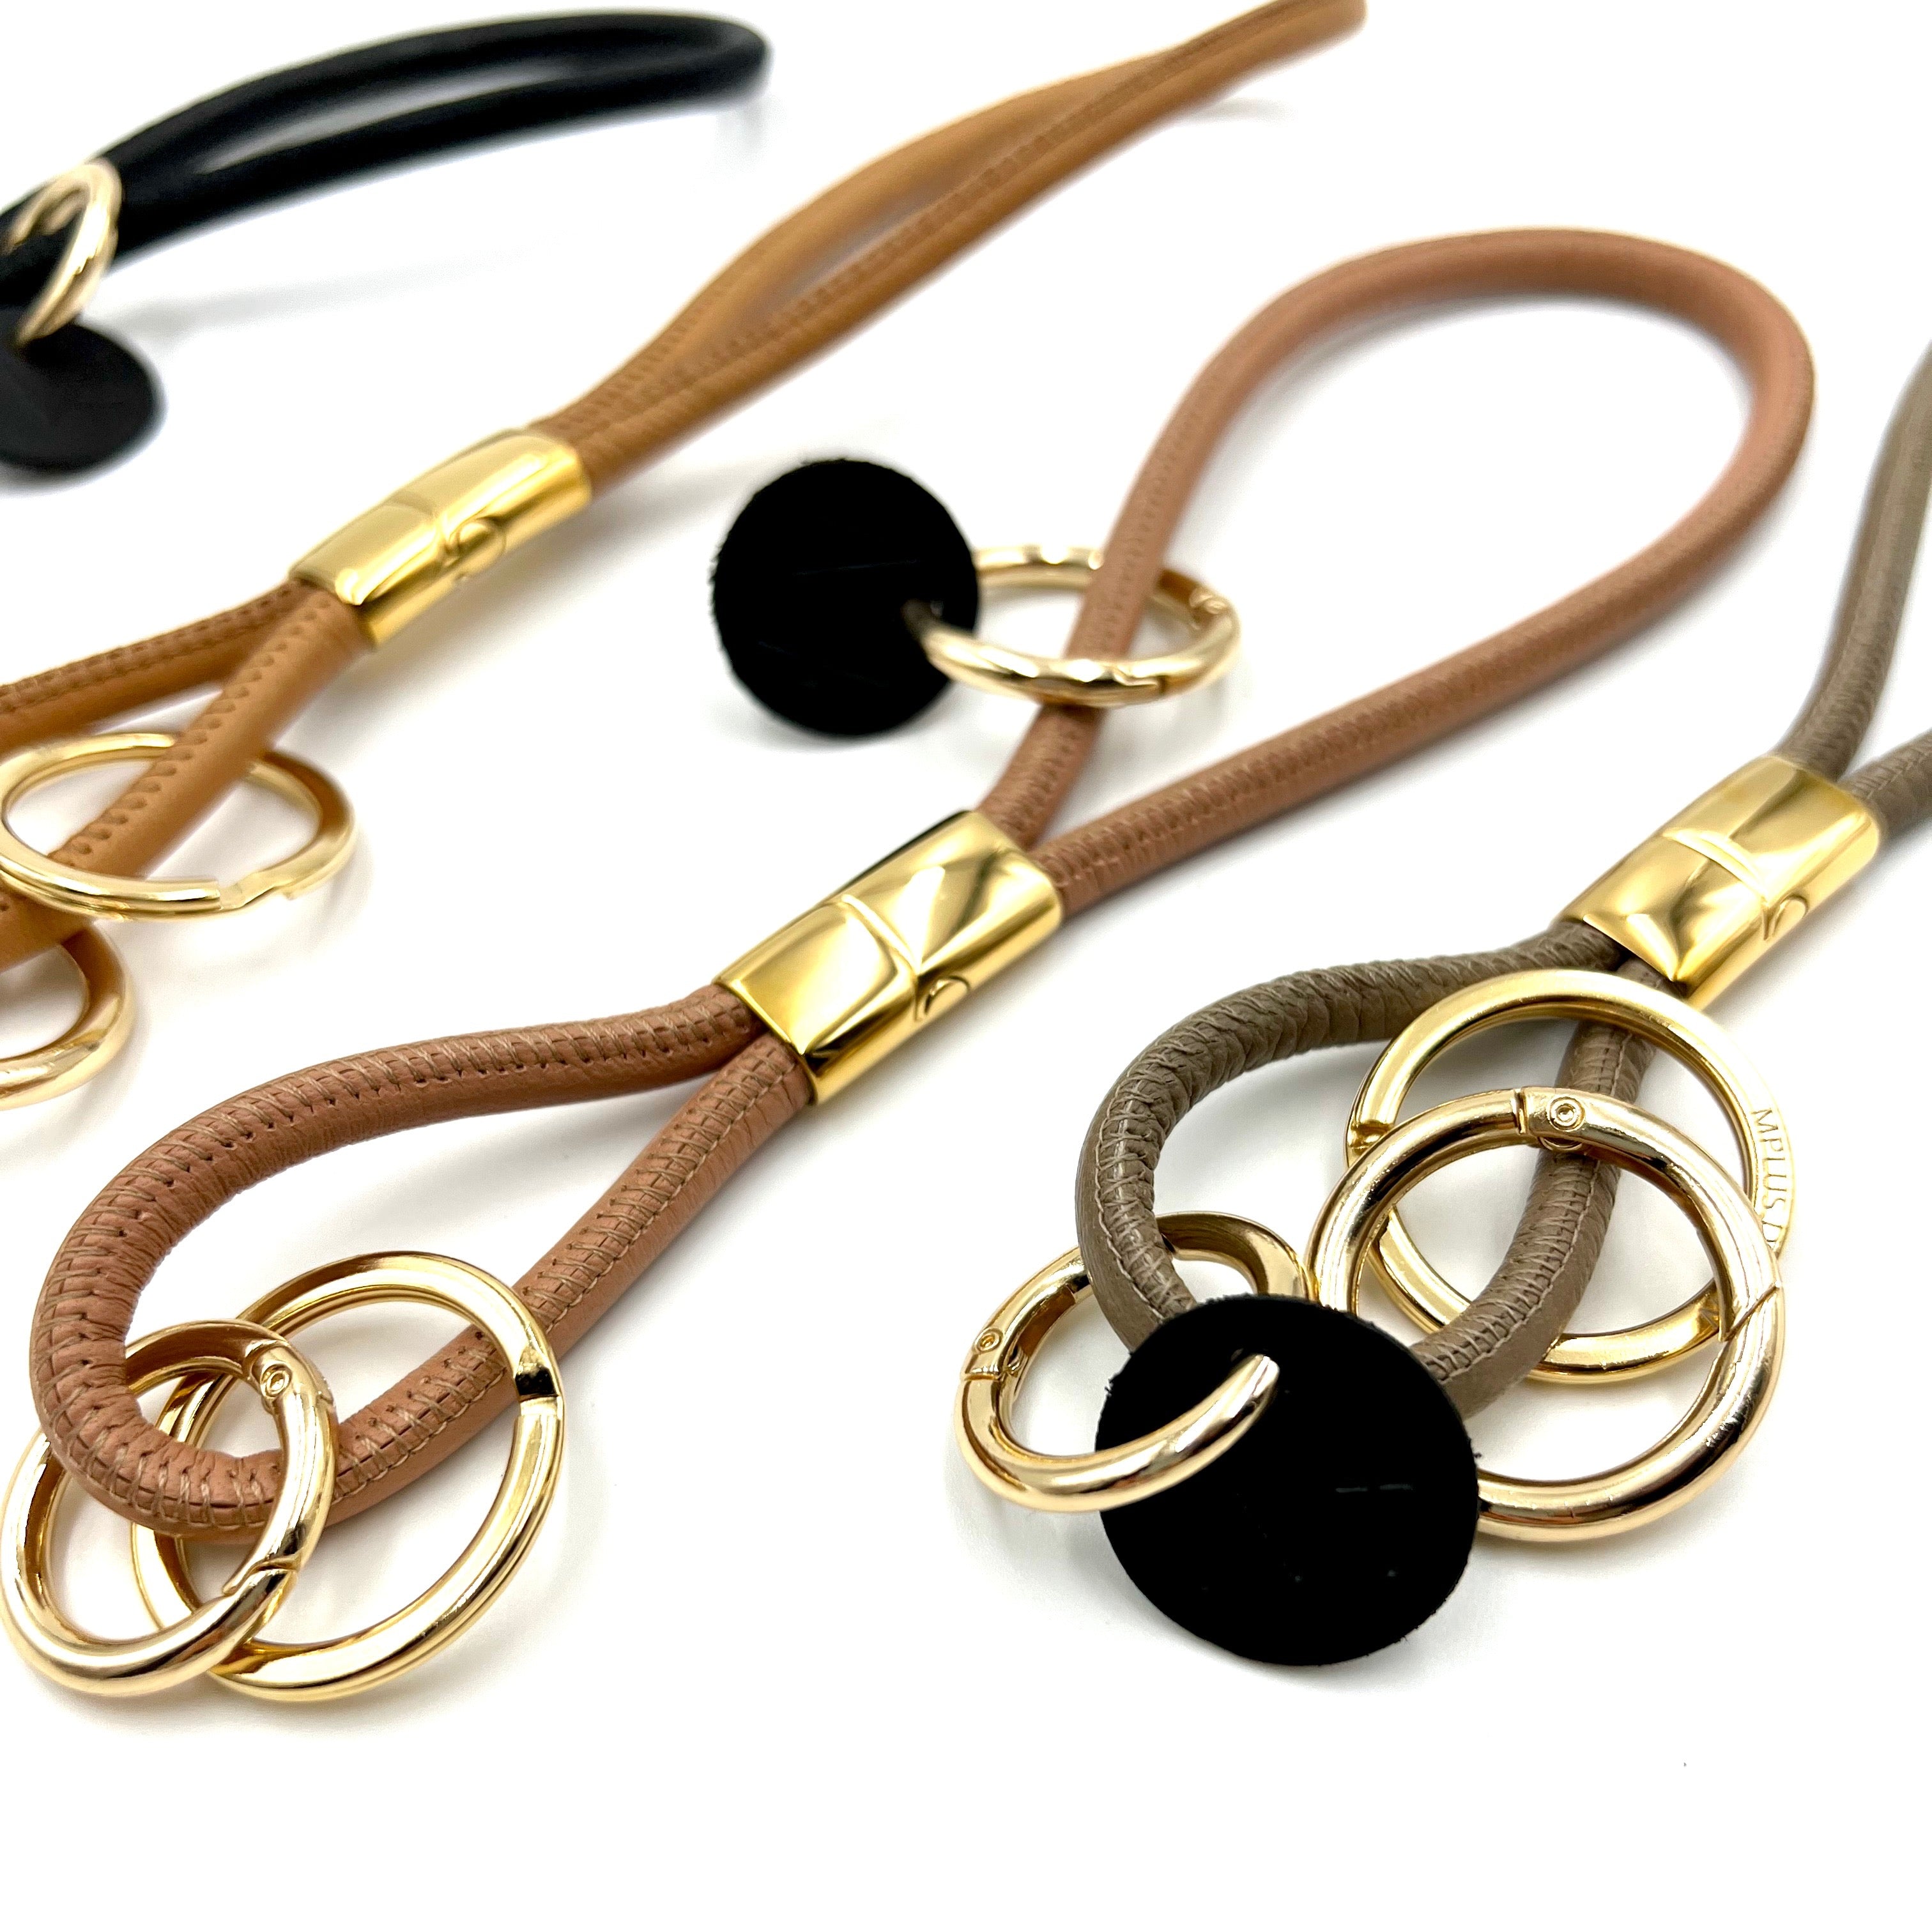 Key Bracelet Schlüsselanhänger Leder teilbar Armband Trageschlaufe Autoschlüssel Schlüssel Accessoire